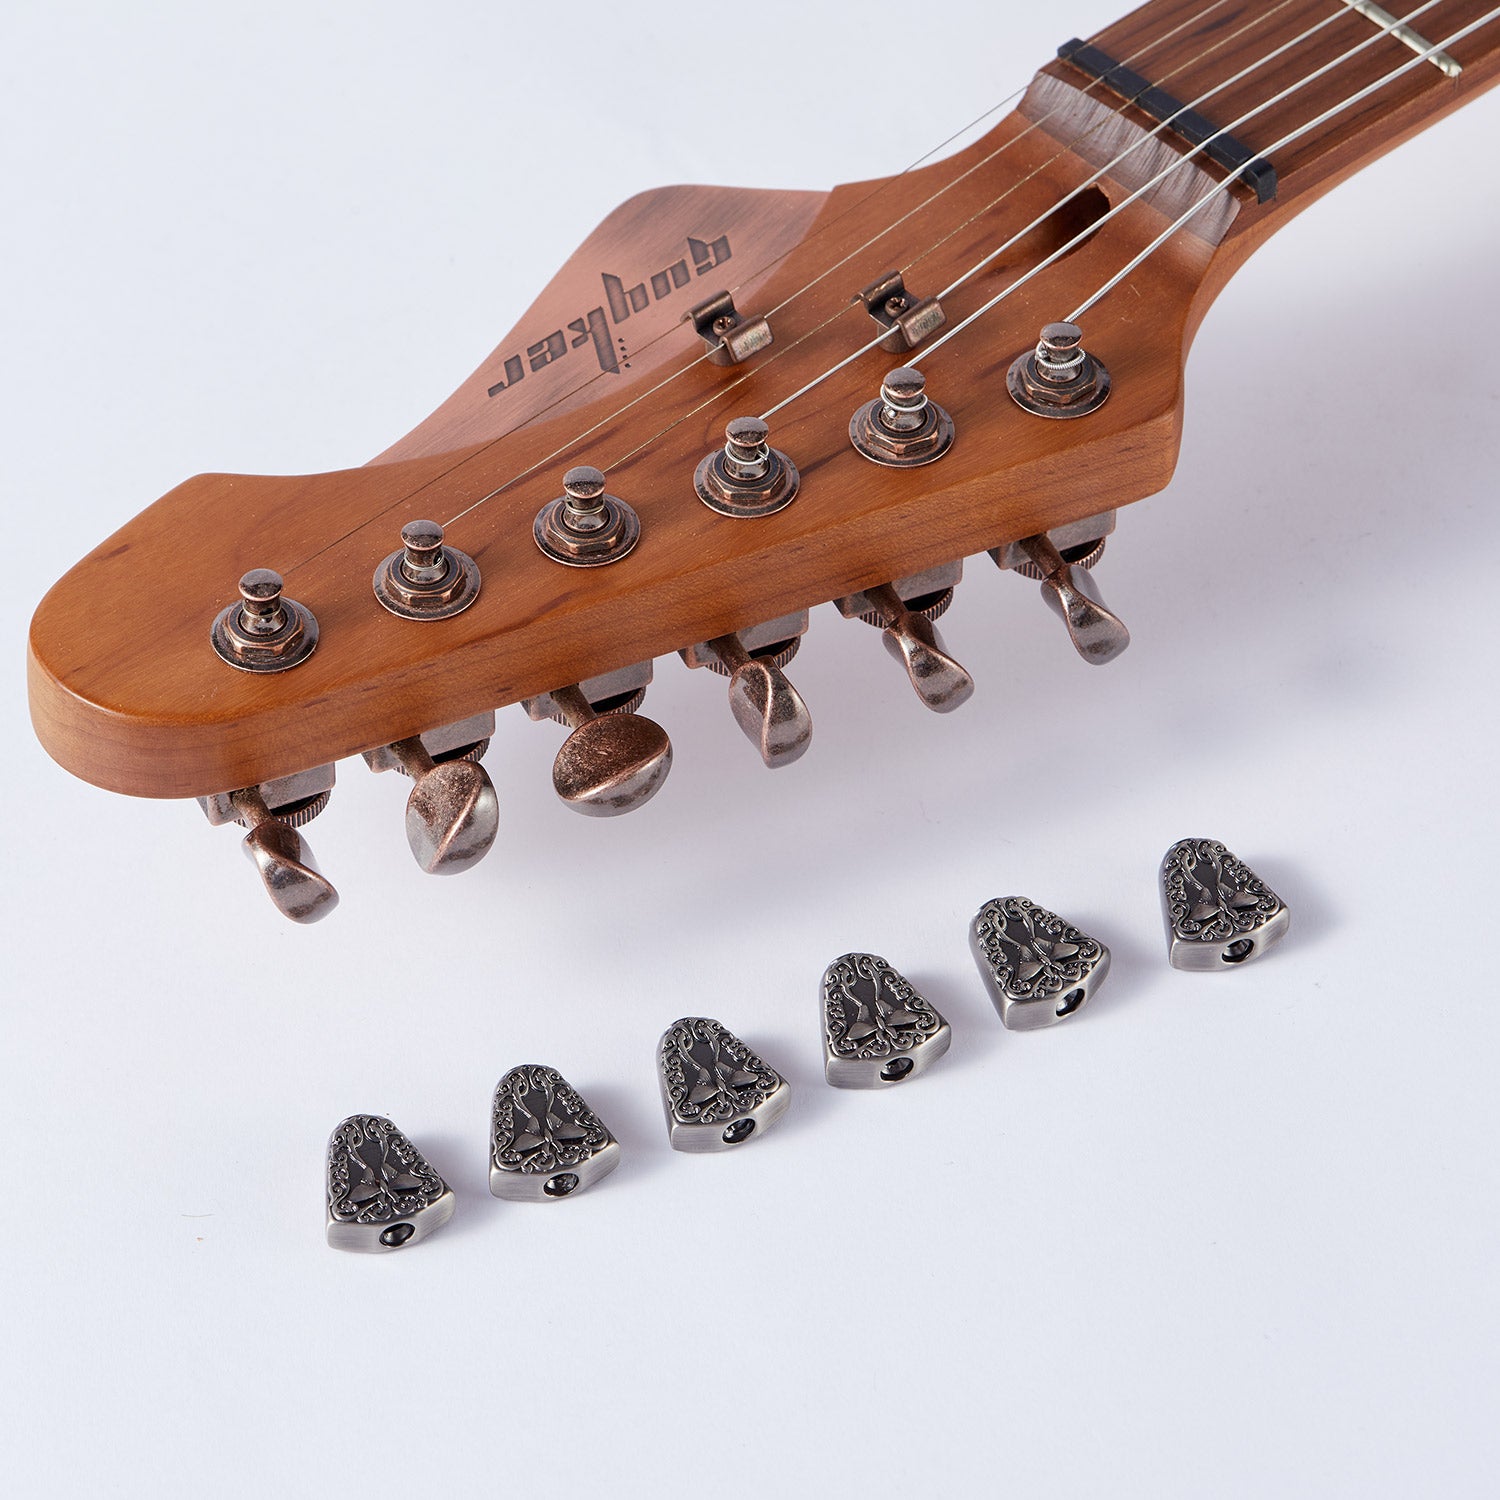  b04-guyker-tunings-buttons-6-pcs-for-guitar